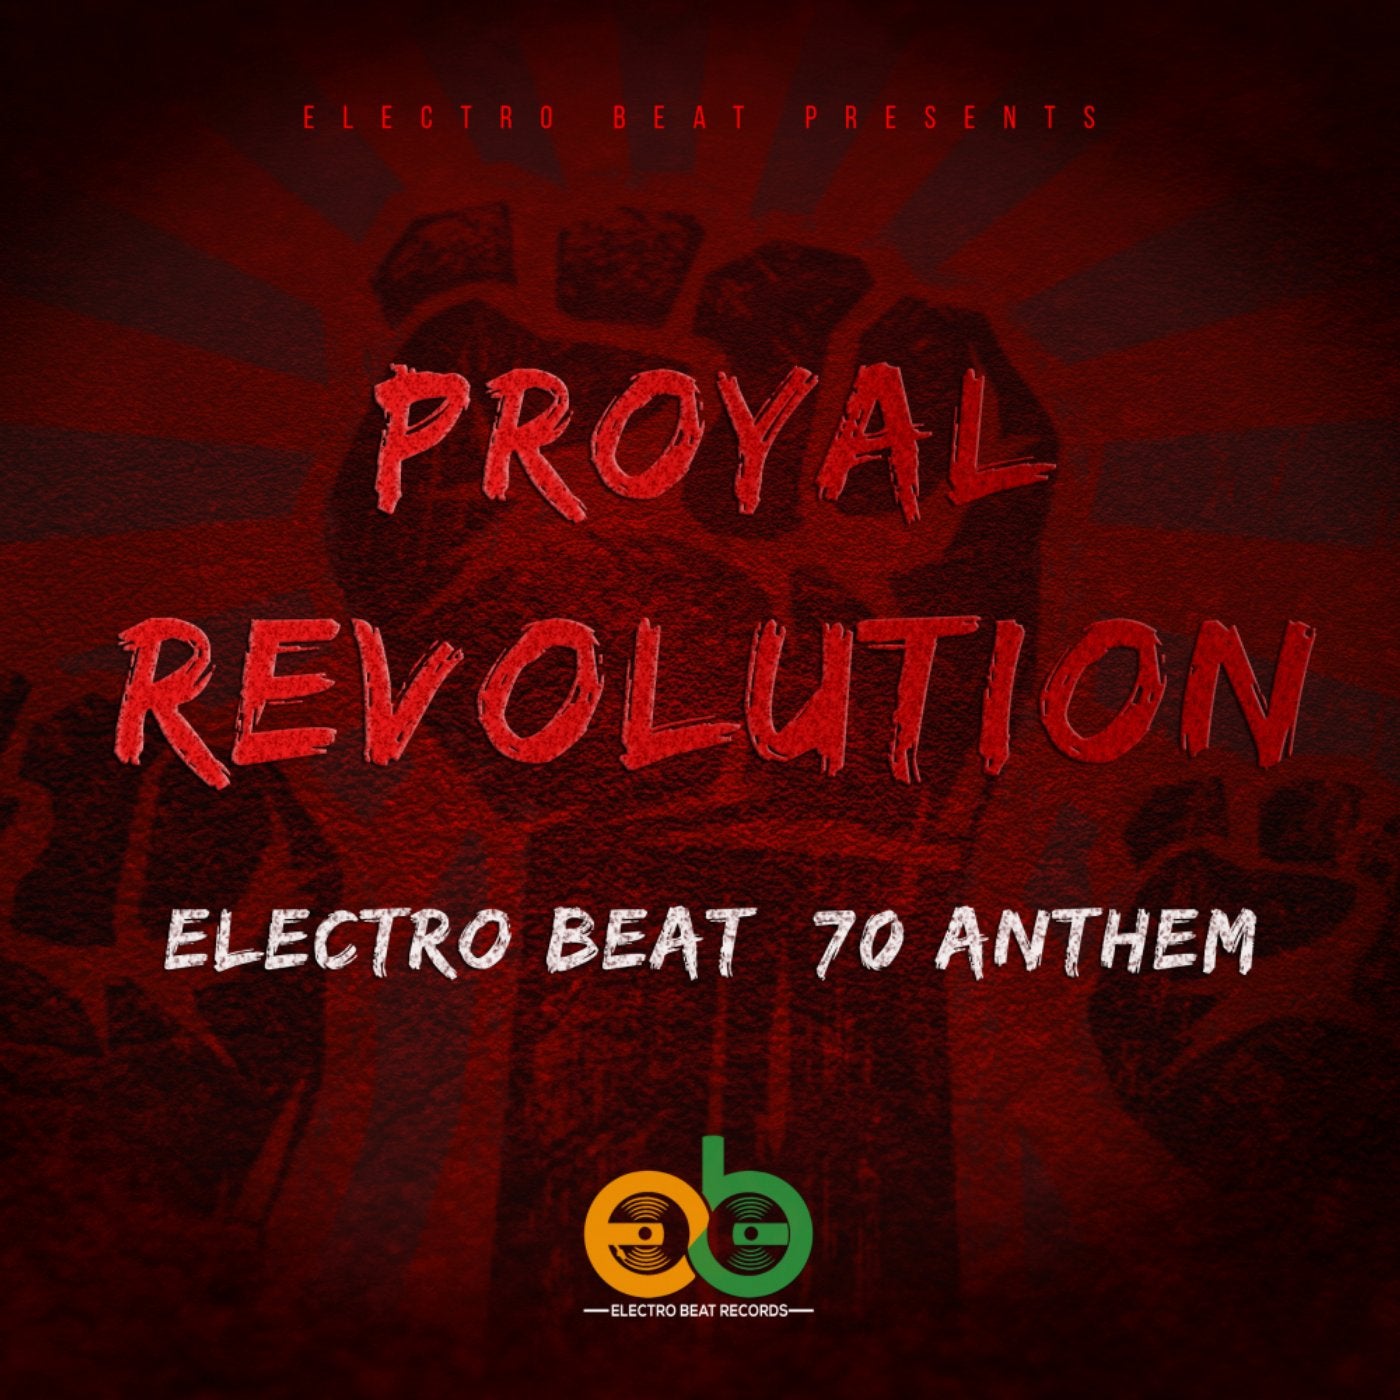 Revolution (Electro BEAT 70 Anthem)